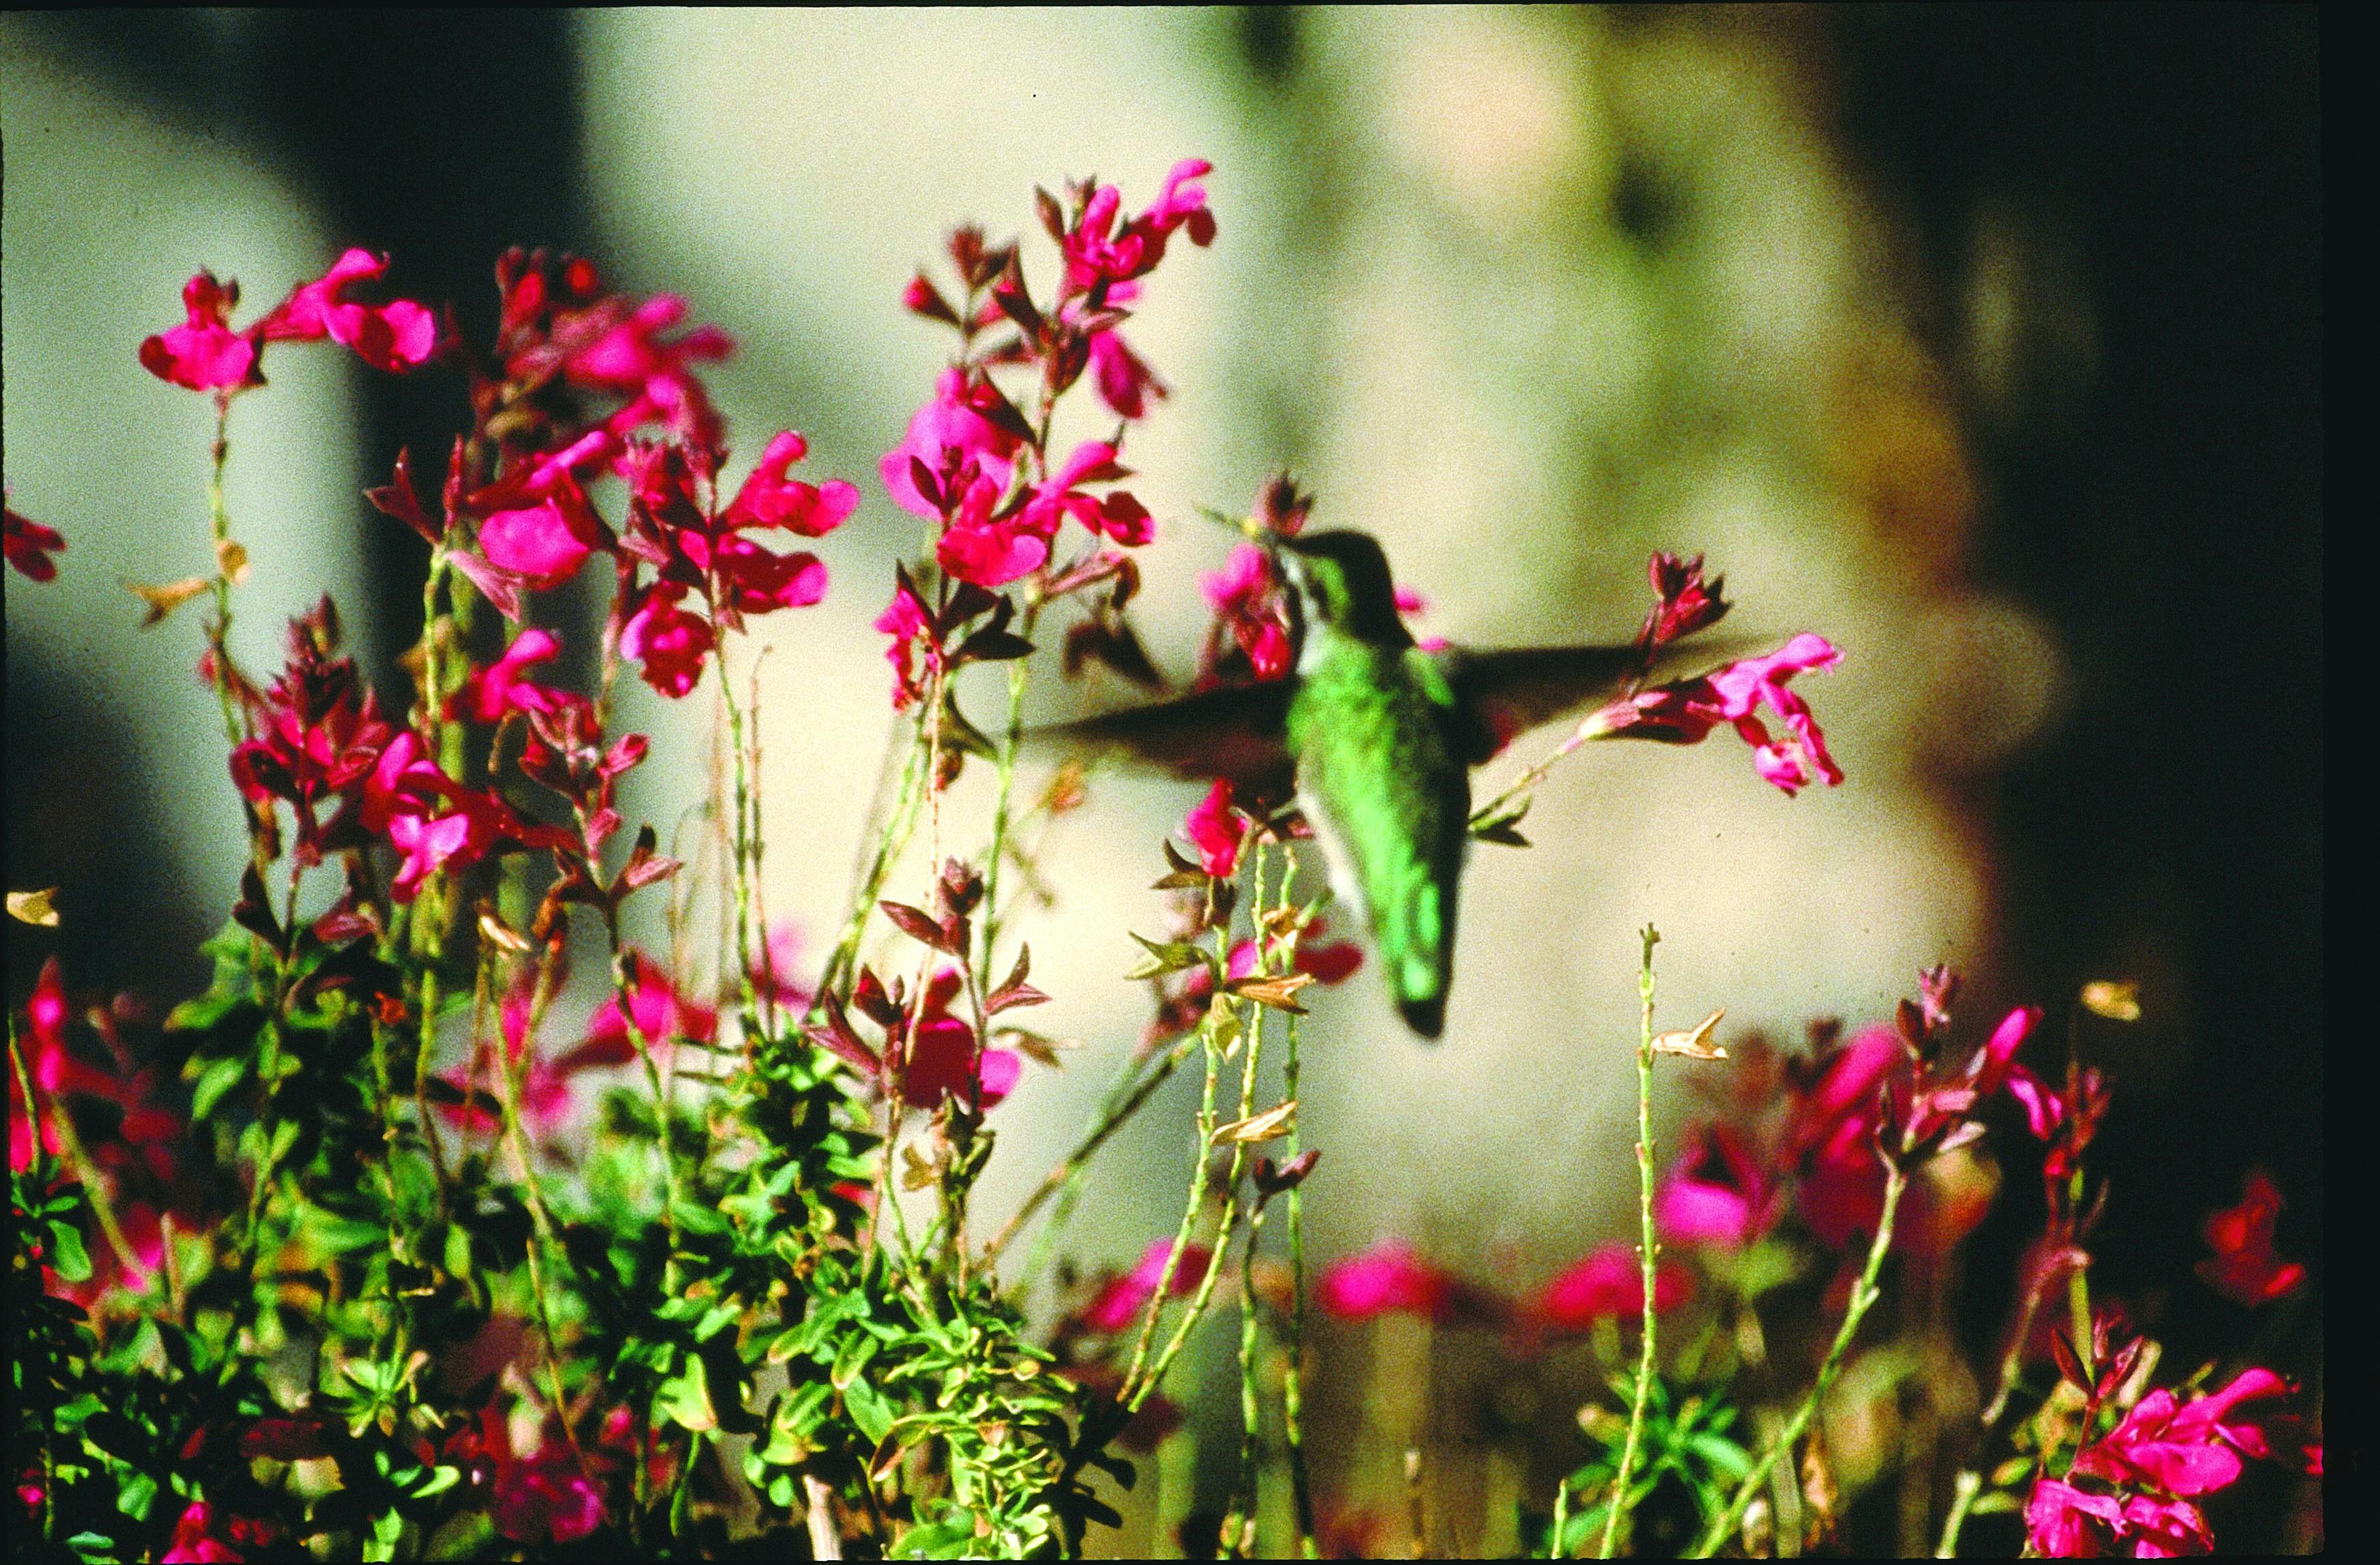 Hummingbird visiting flowers